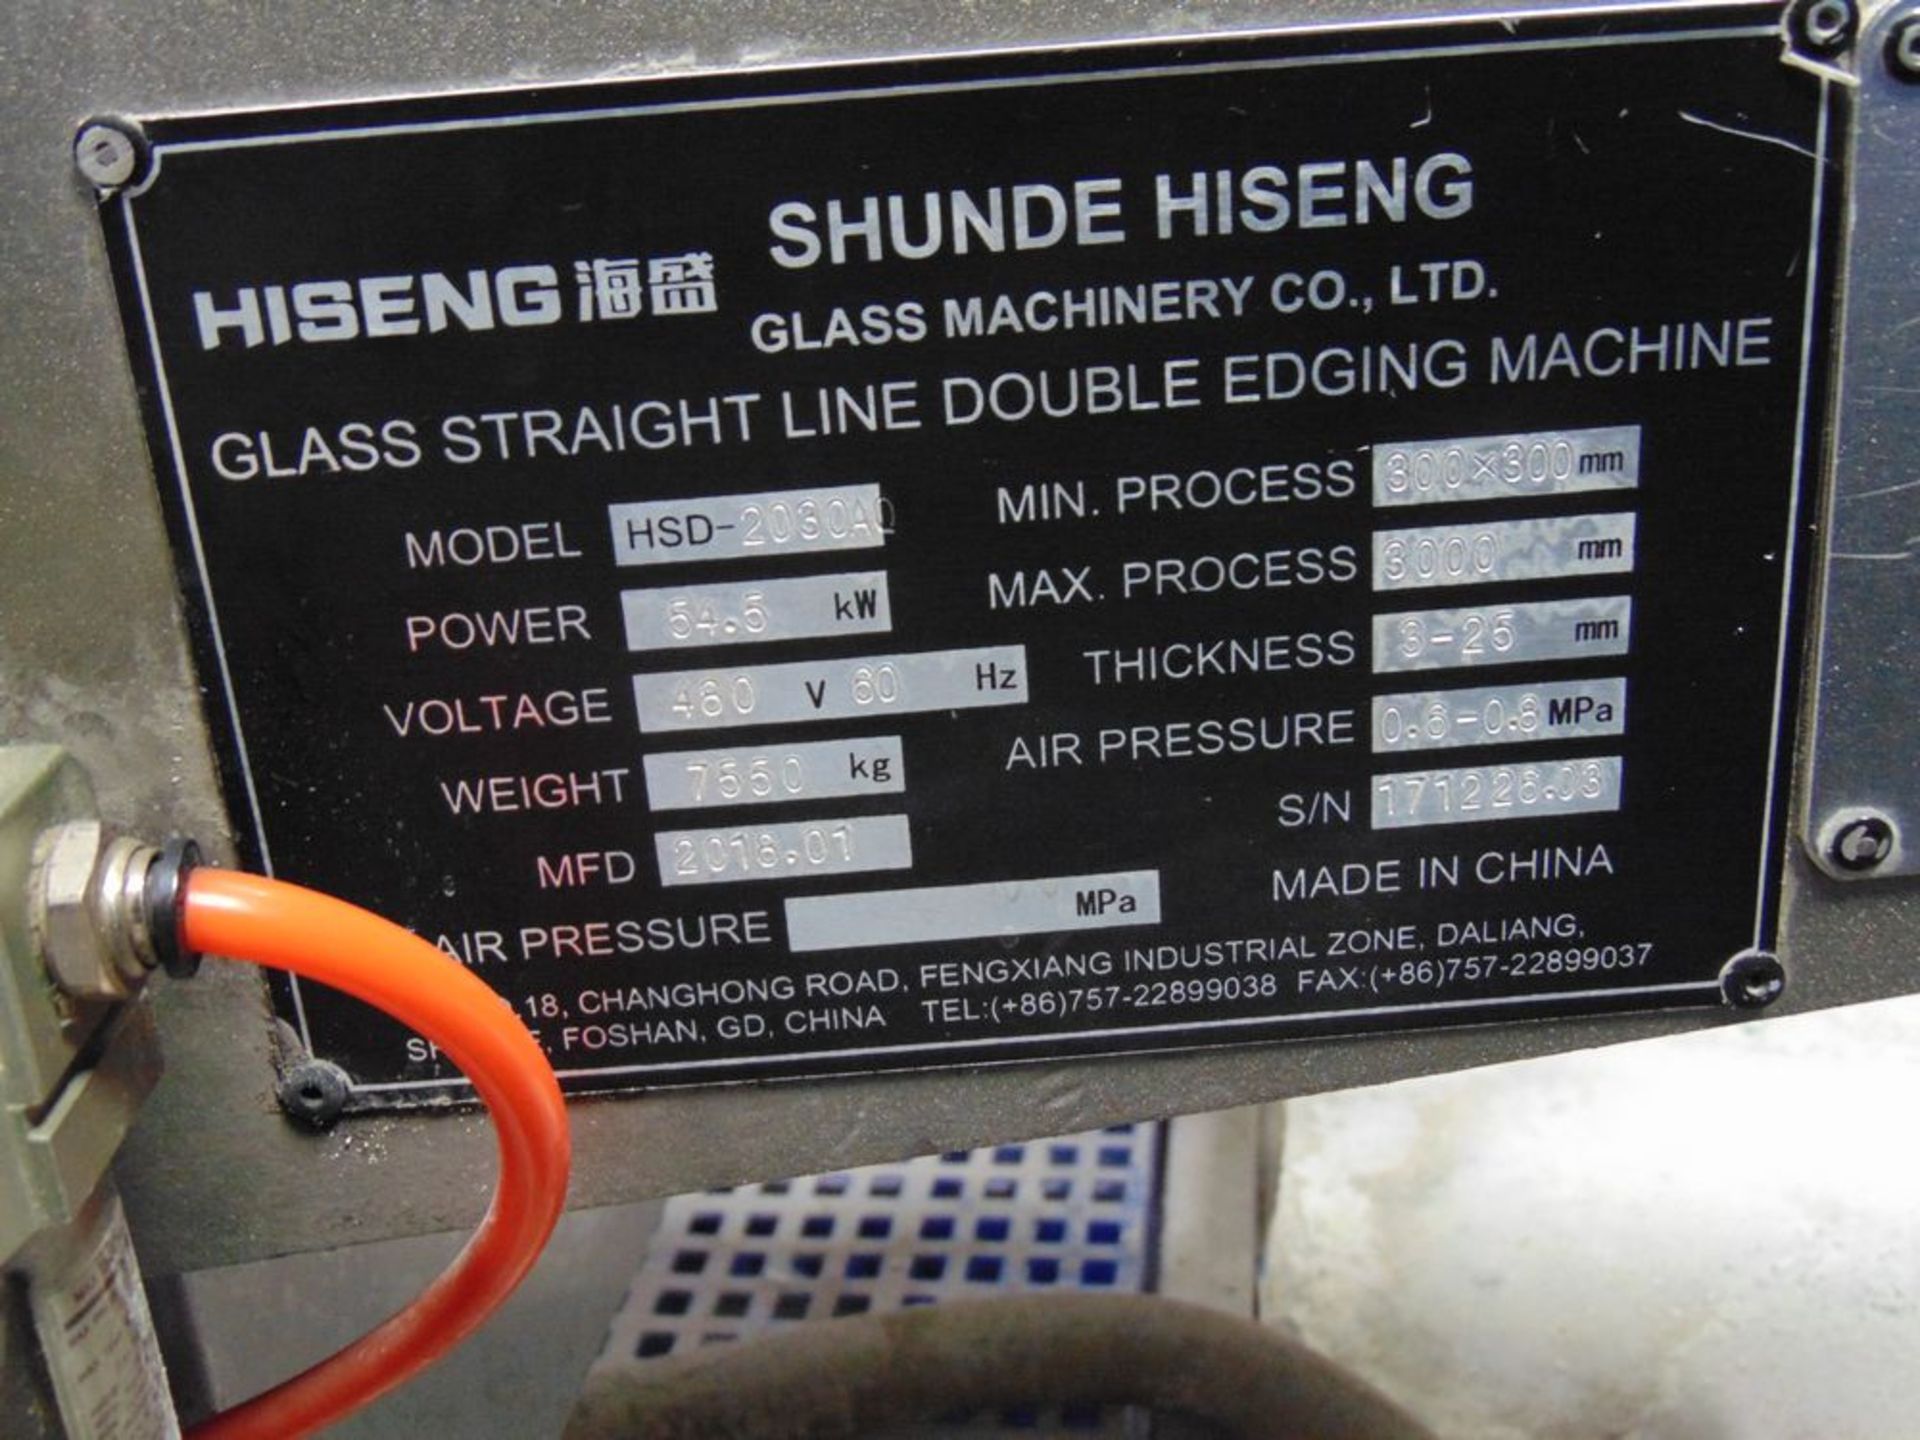 (2018) Shunde Hiseng mod. HSD-2030AQ, Glass Straight Line, Dbl. Edging Machine; S/N 171226.03 - Image 5 of 5